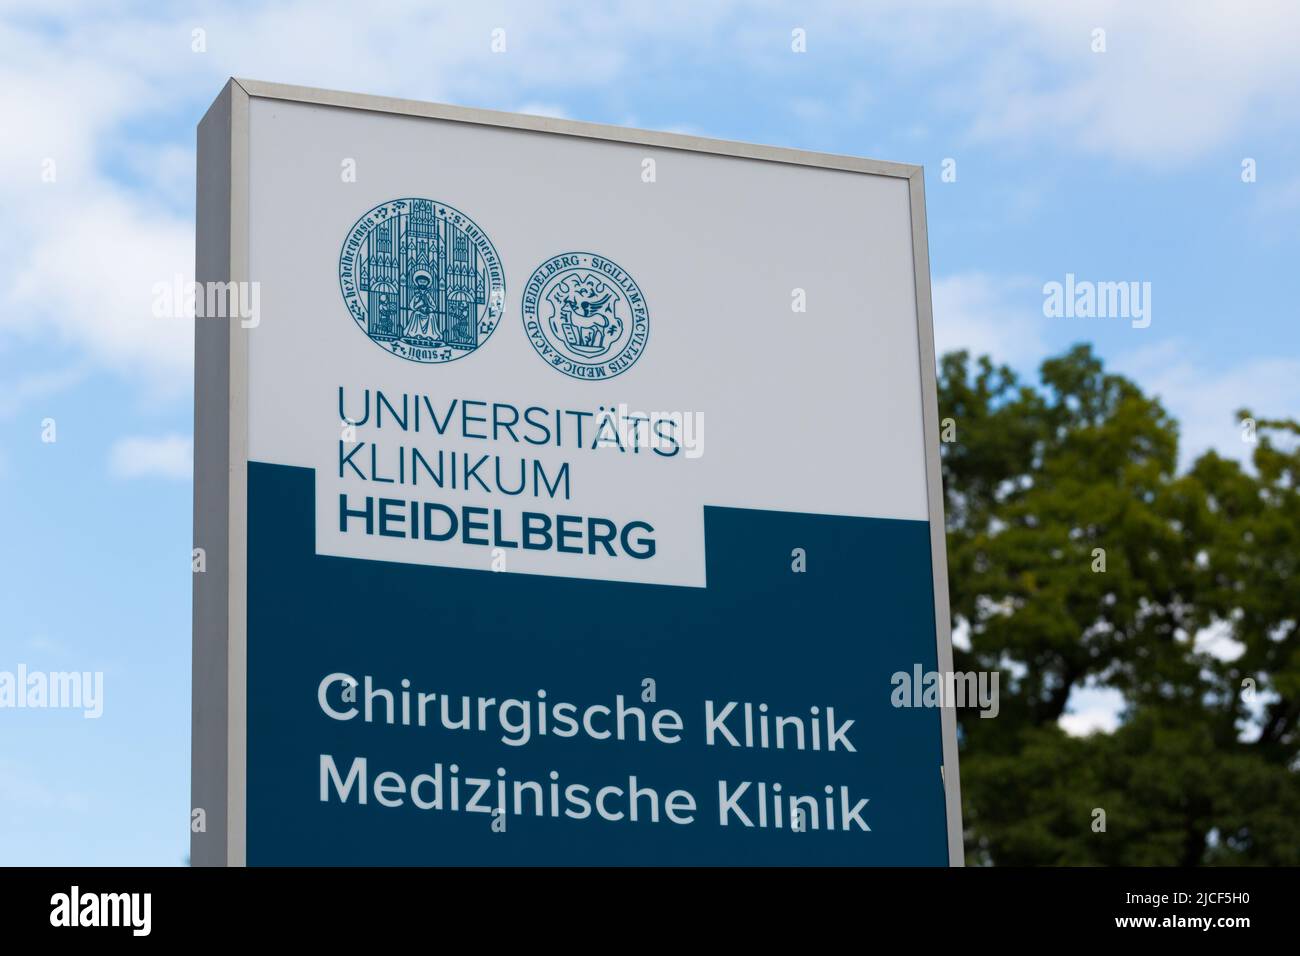 Heidelberg, Germany - Aug 27, 2021: Sign Universitätsklinikum Heidelberg (university hospital Heidelberg). Stock Photo